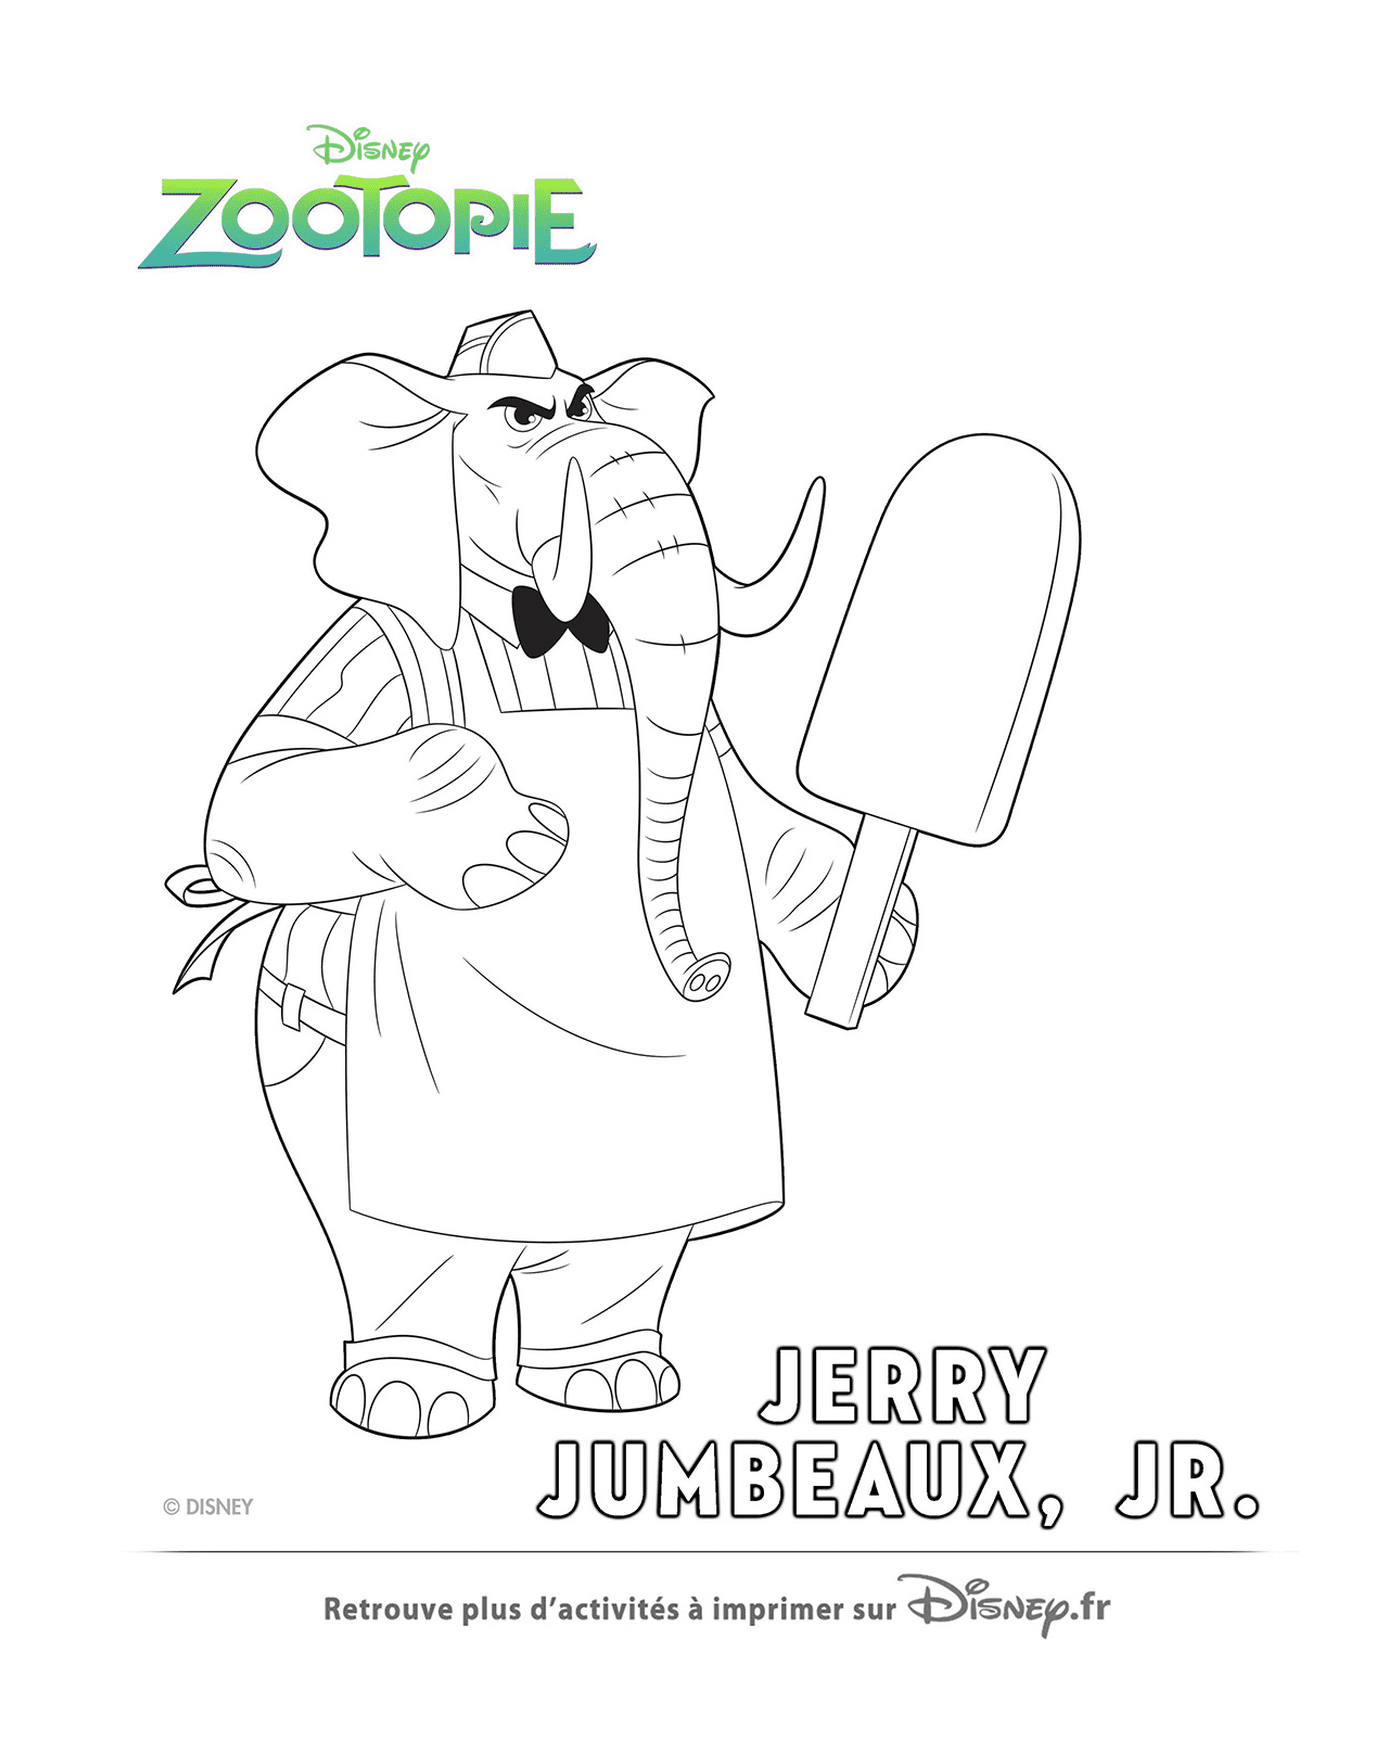  Jerry, vendedor de sorvete do Zootopie 